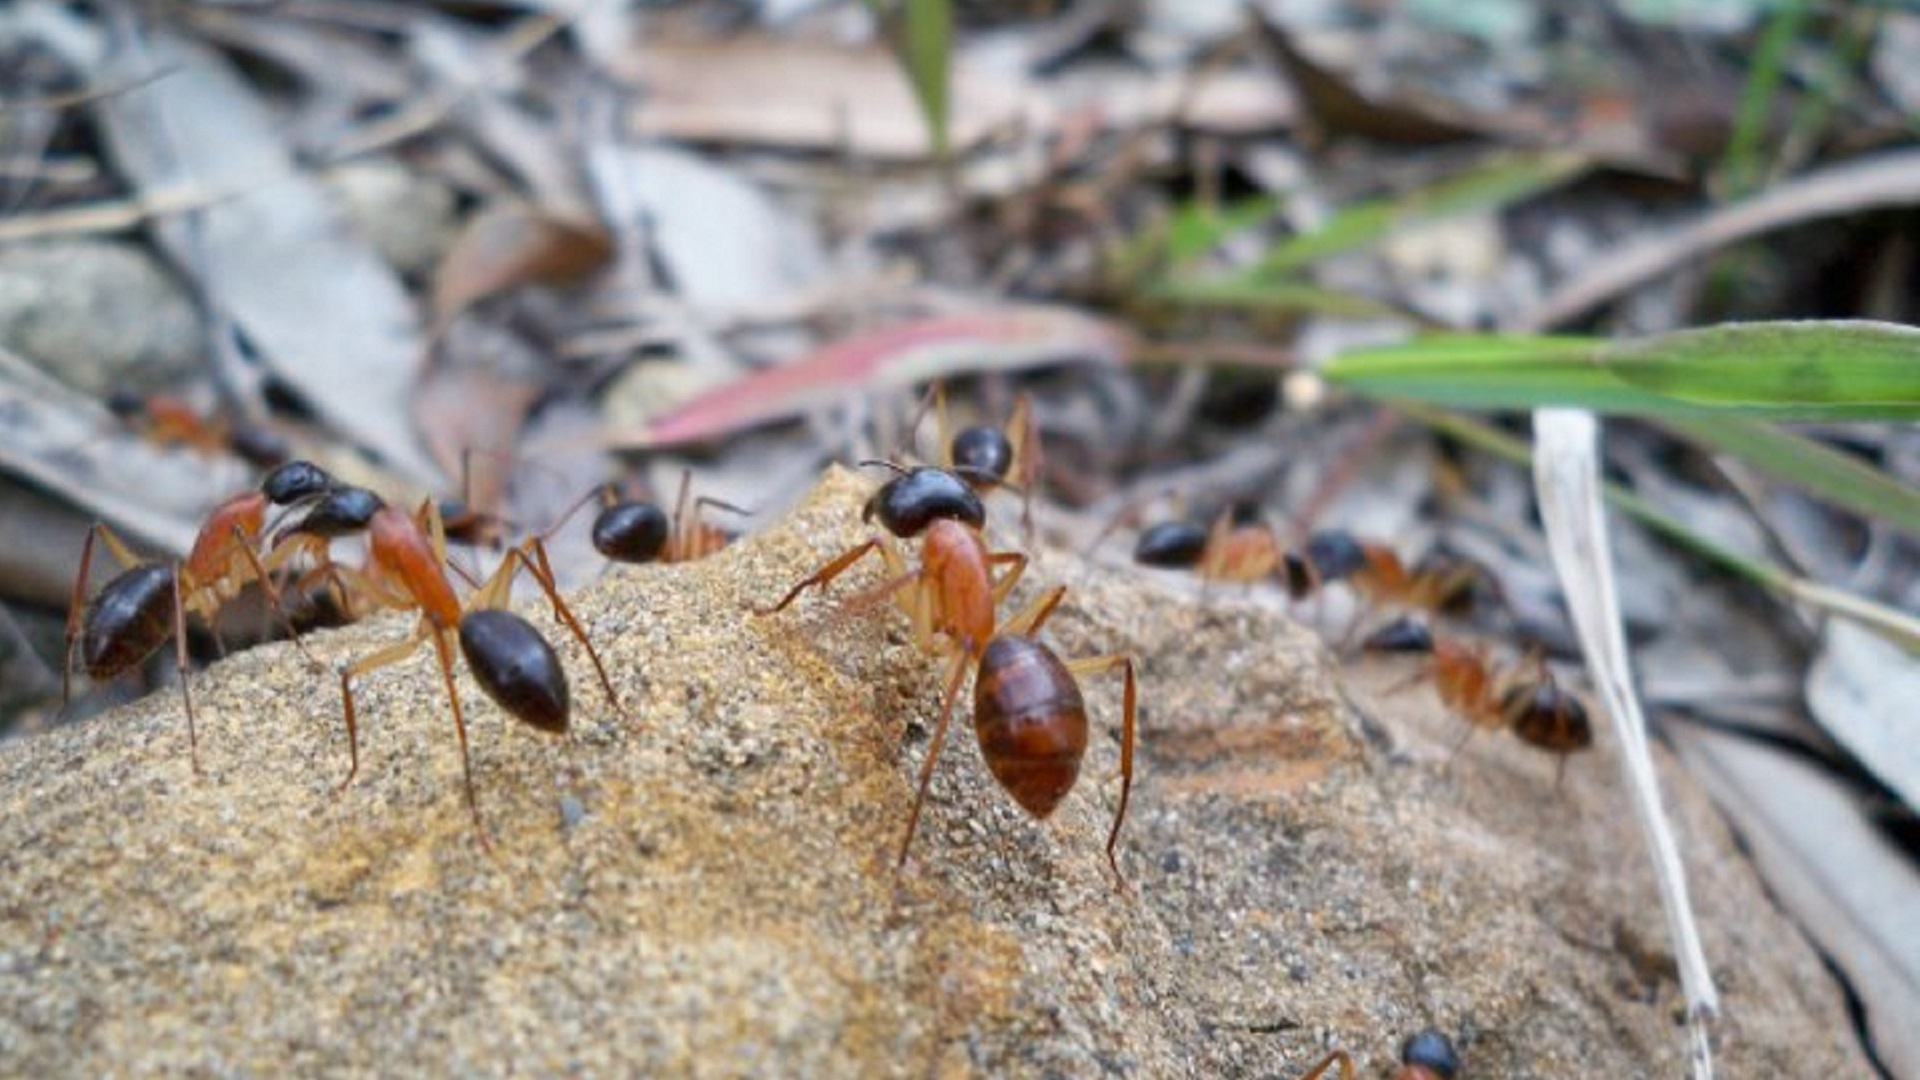 Sugar ants love pee - Cosmos Magazine